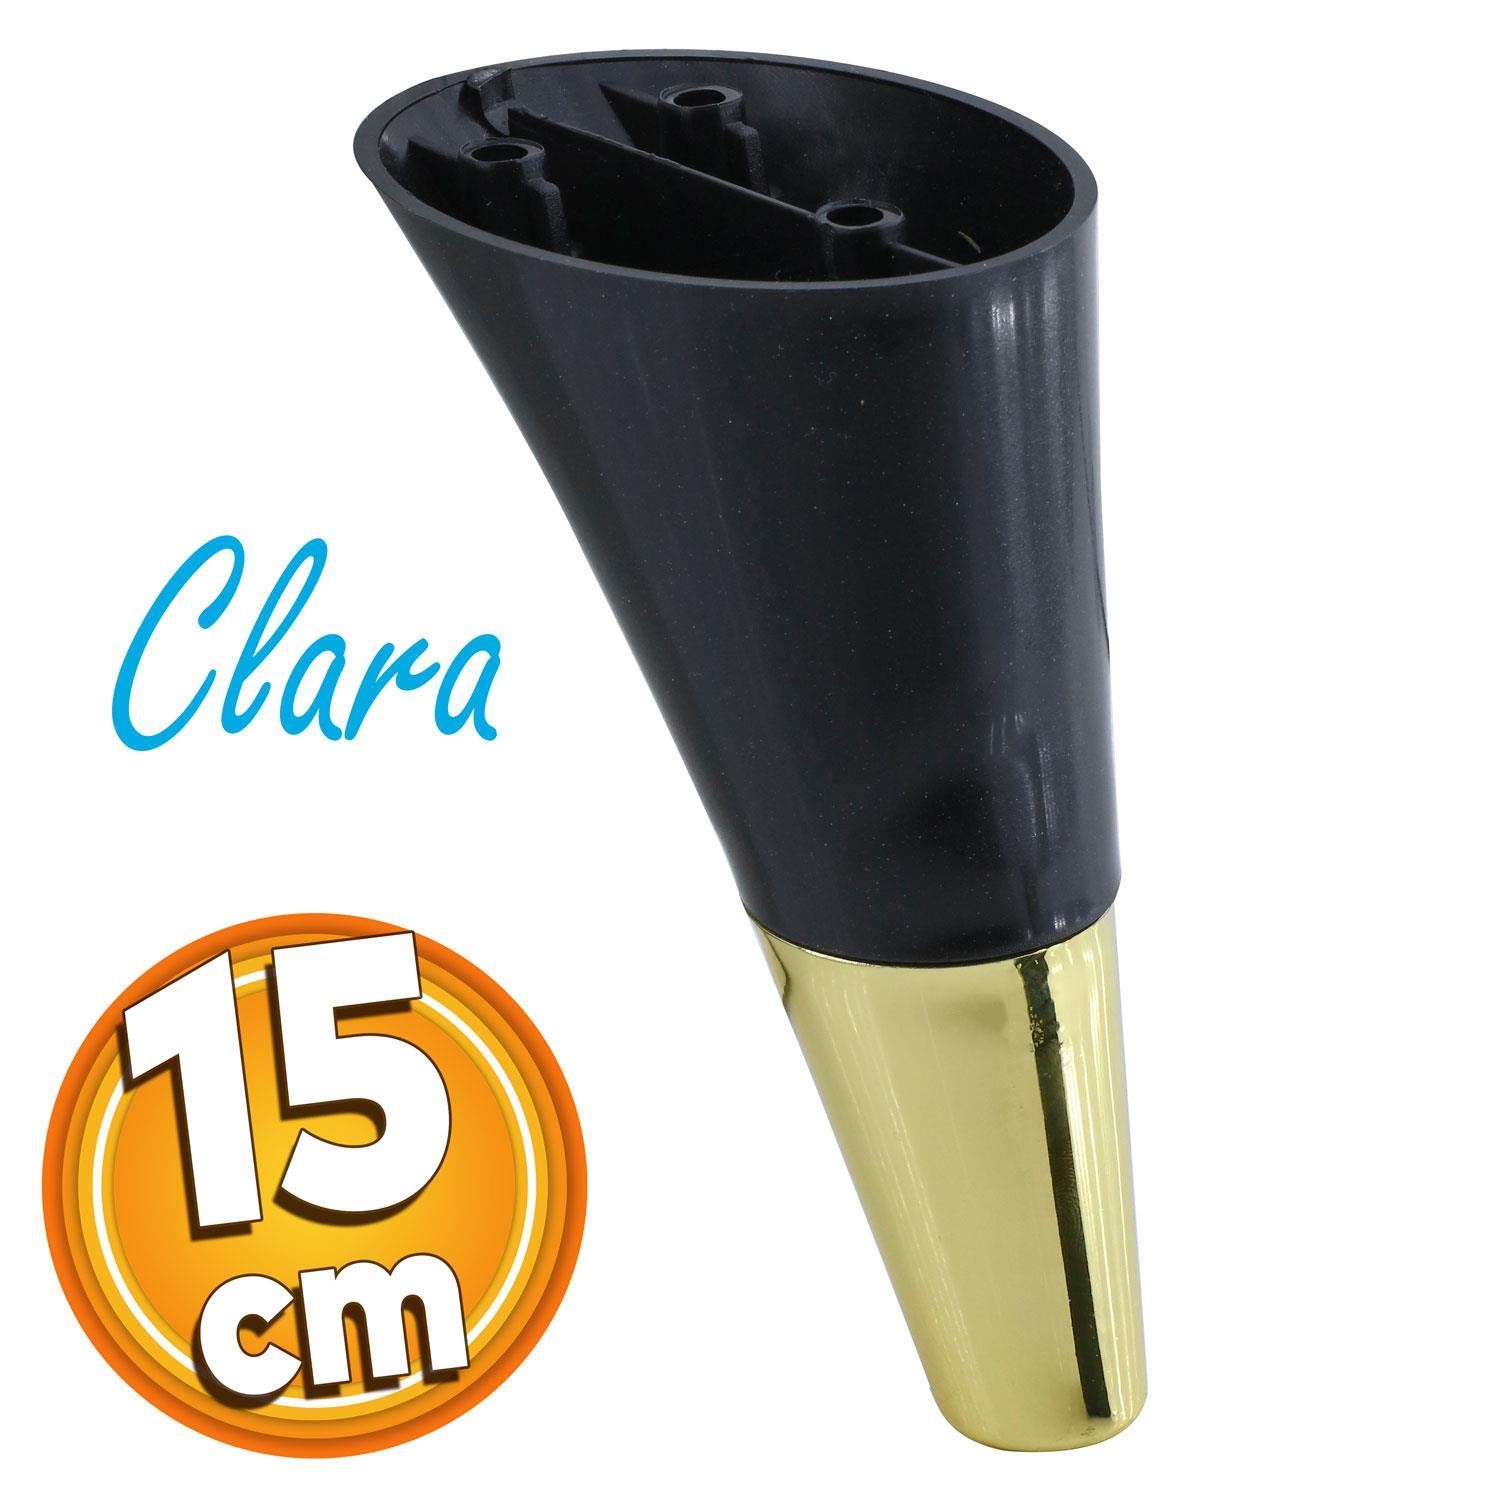 Clara Mobilya Kanepe Sehpa TV Ünitesi Baza Koltuk Ayağı Siyah Gold Renk 15 cm (4 Adet)